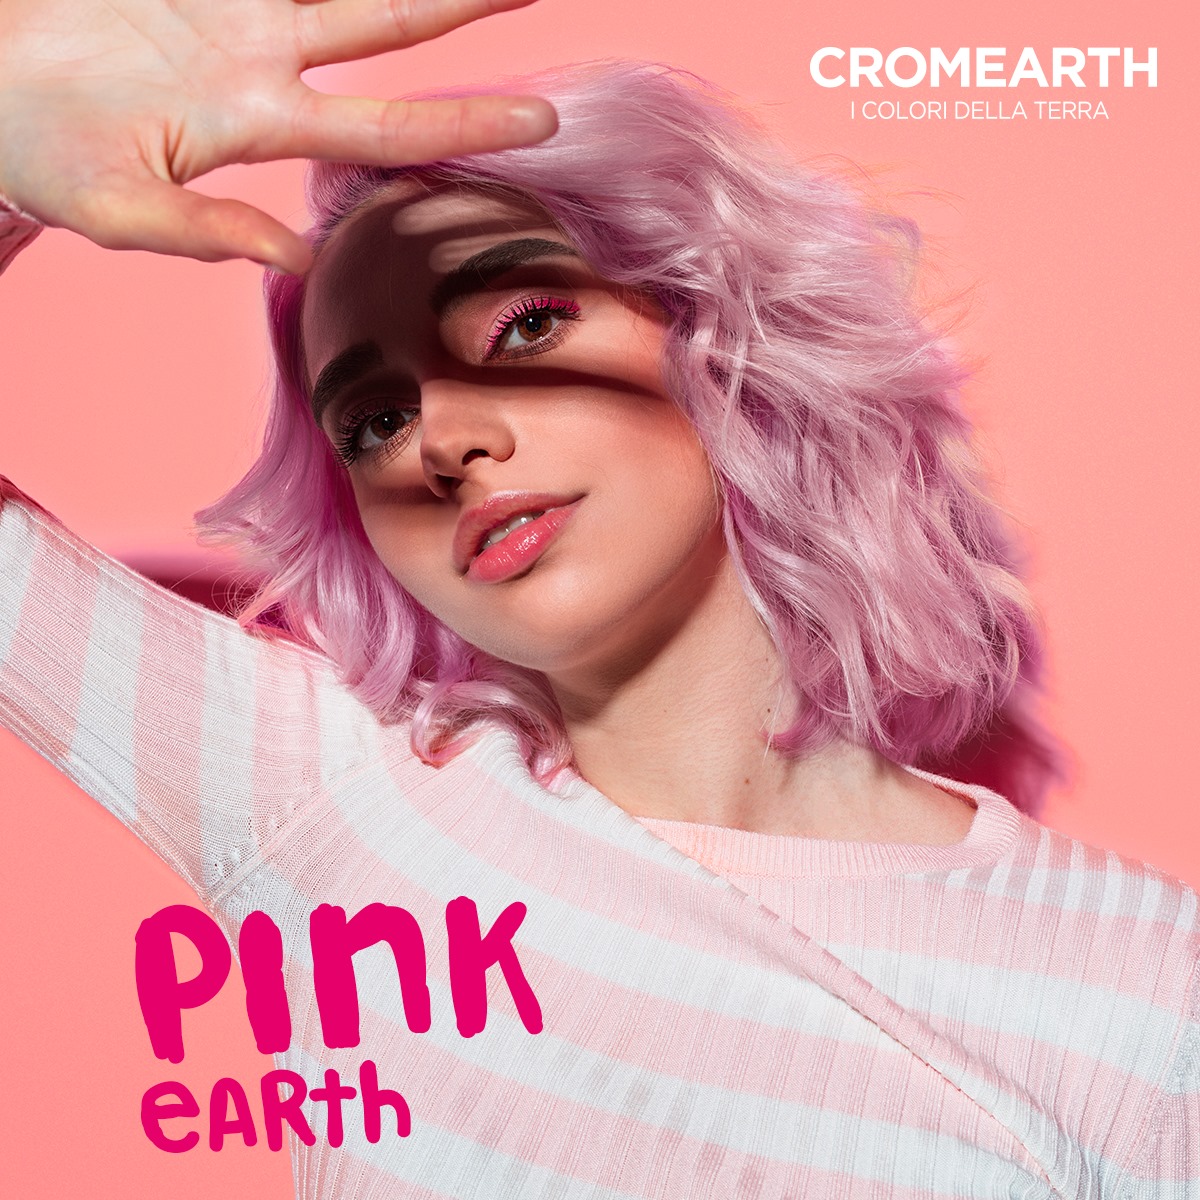 Pink Earth Mask de Cromearth de RICA